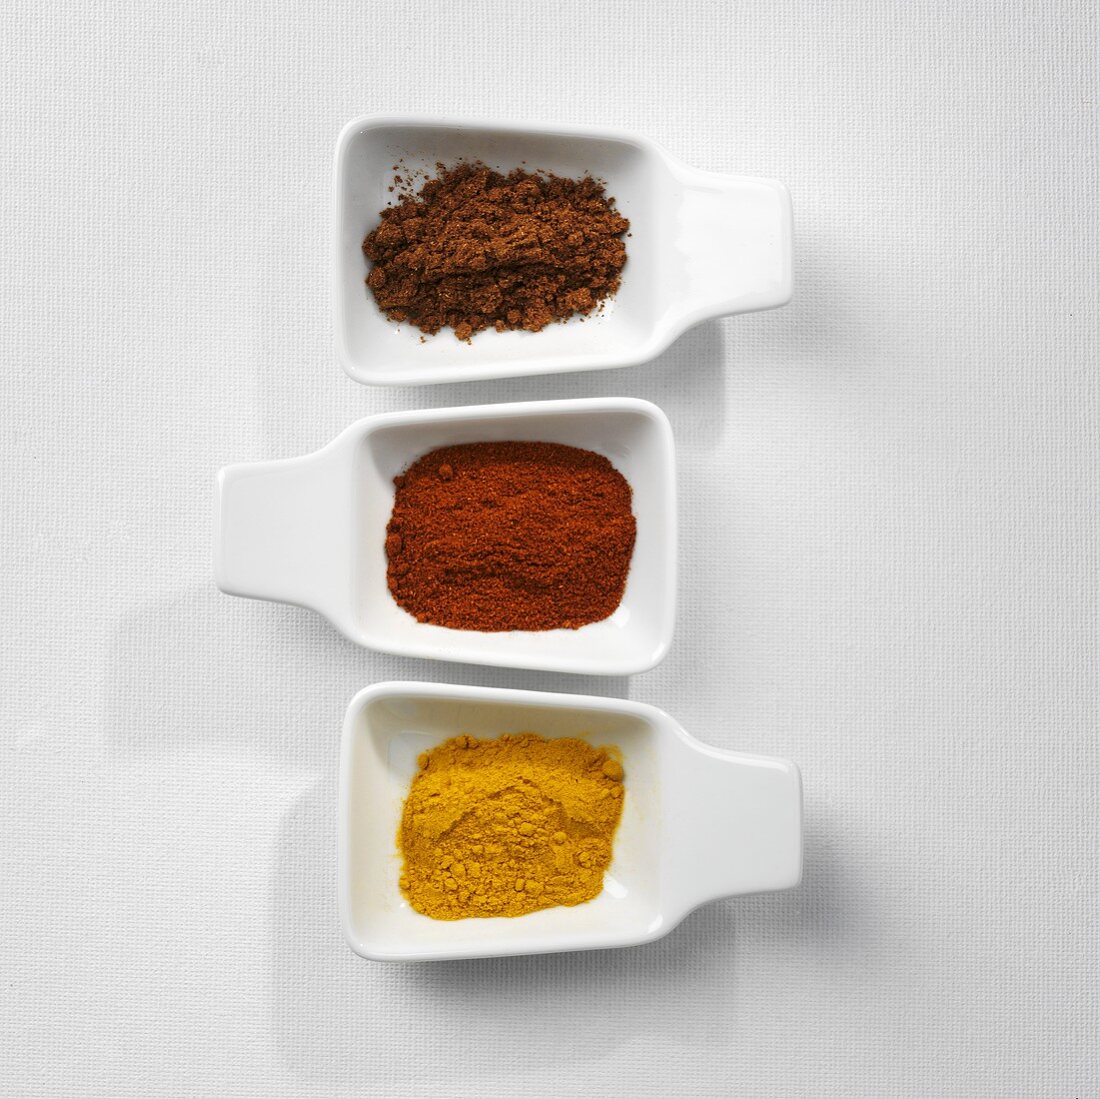 Five-spce powder, paprika and turmeric